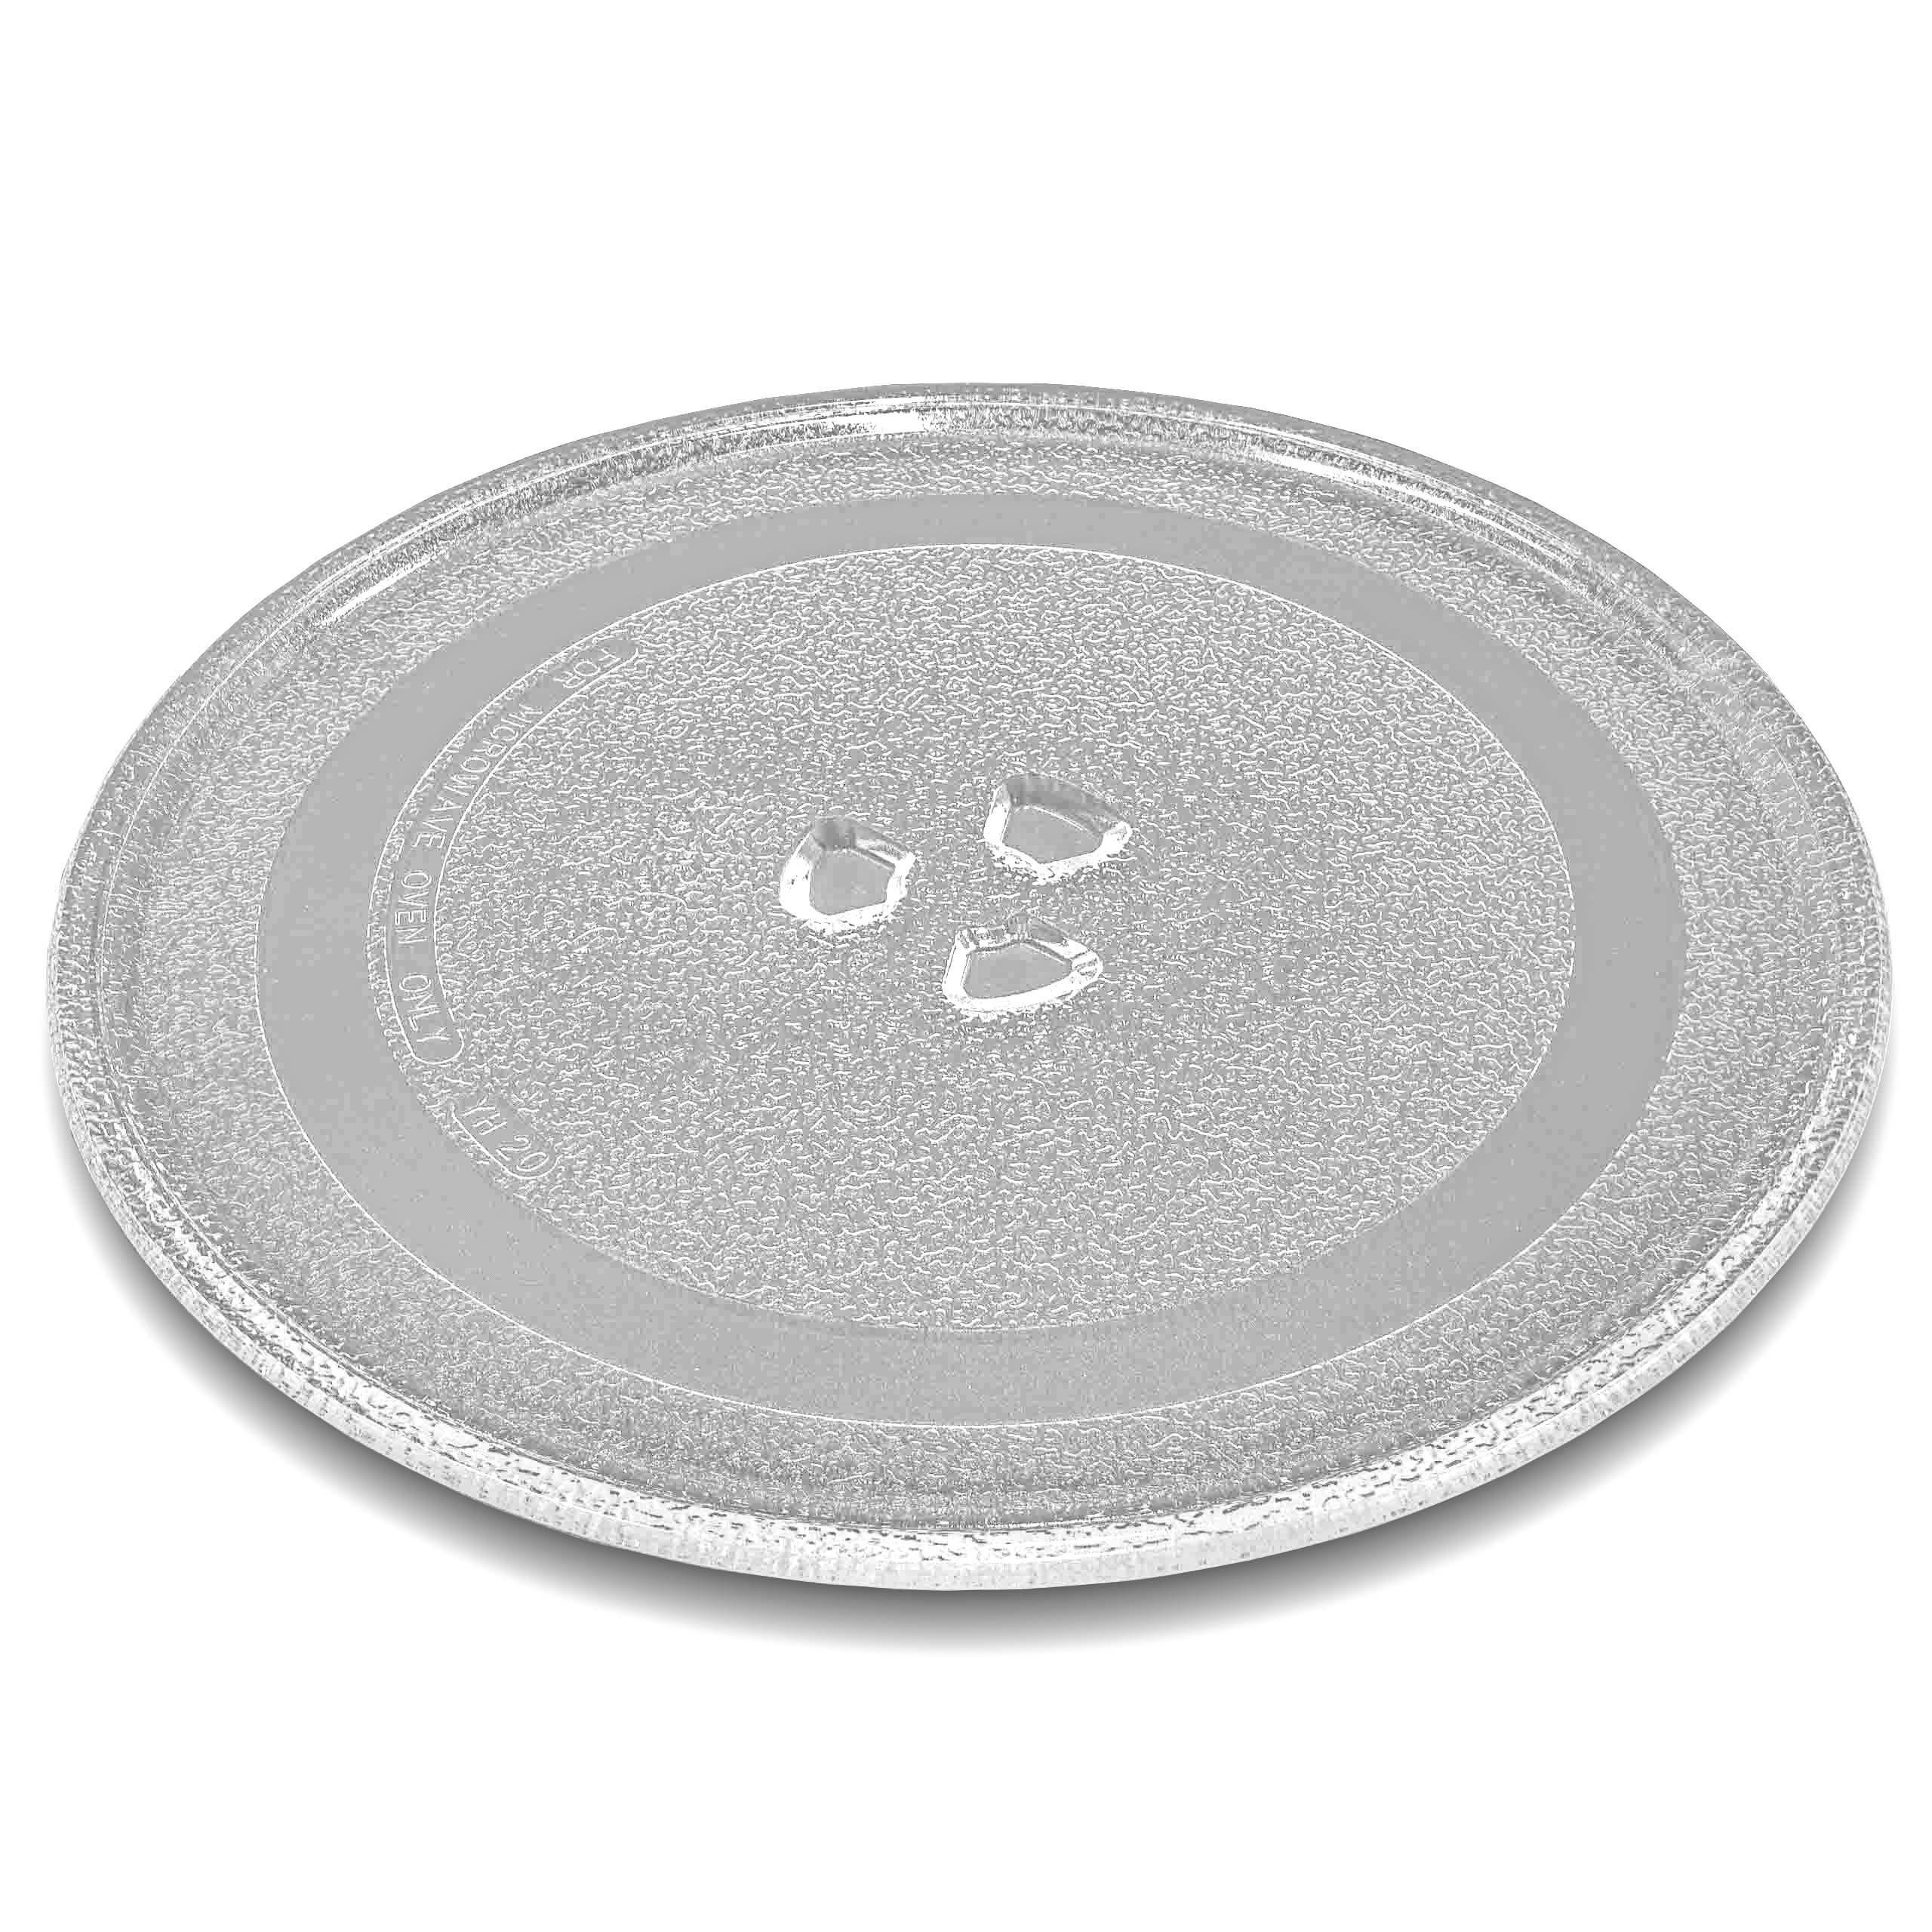 vidrio plato para microondas, plato giratorio de 24,5 cm para microondas Silvercrest etc.